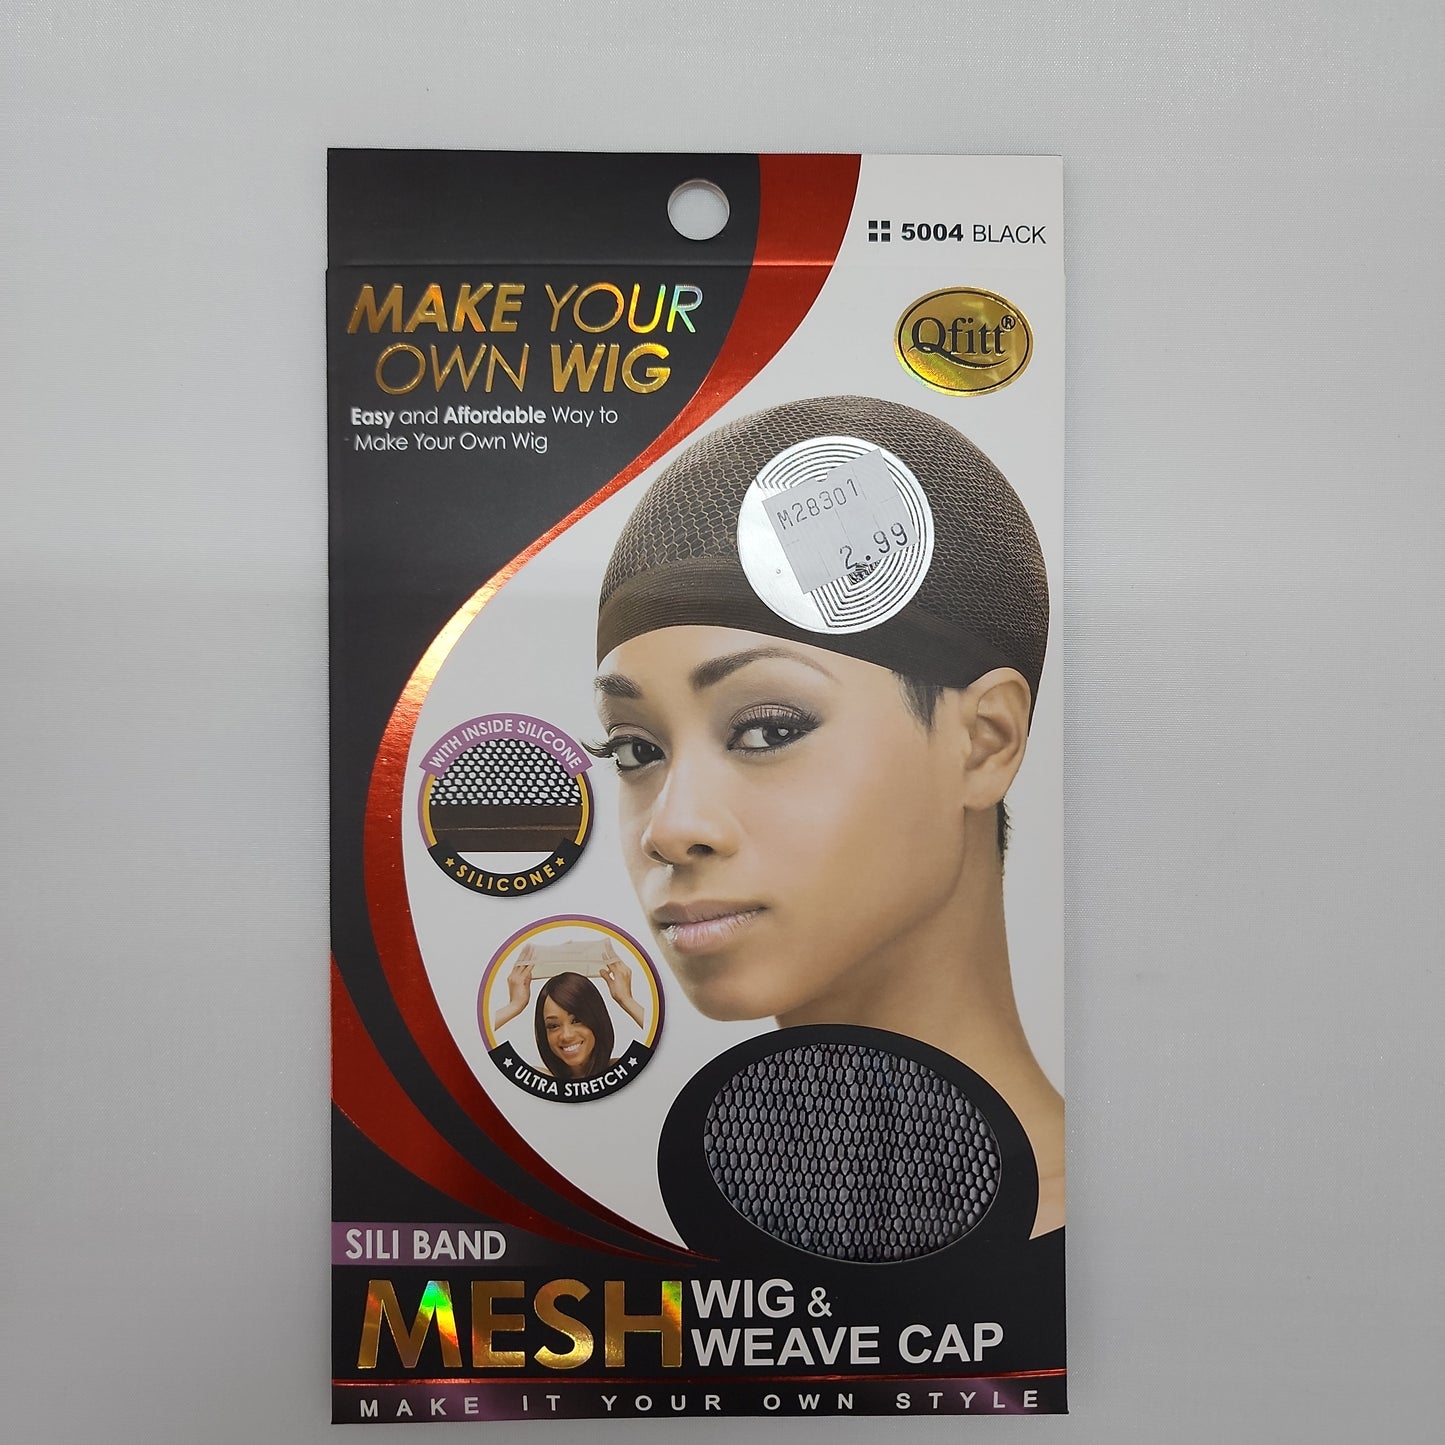 Qfitt Make Your Own Wig Mesg Wig & Weave Cap